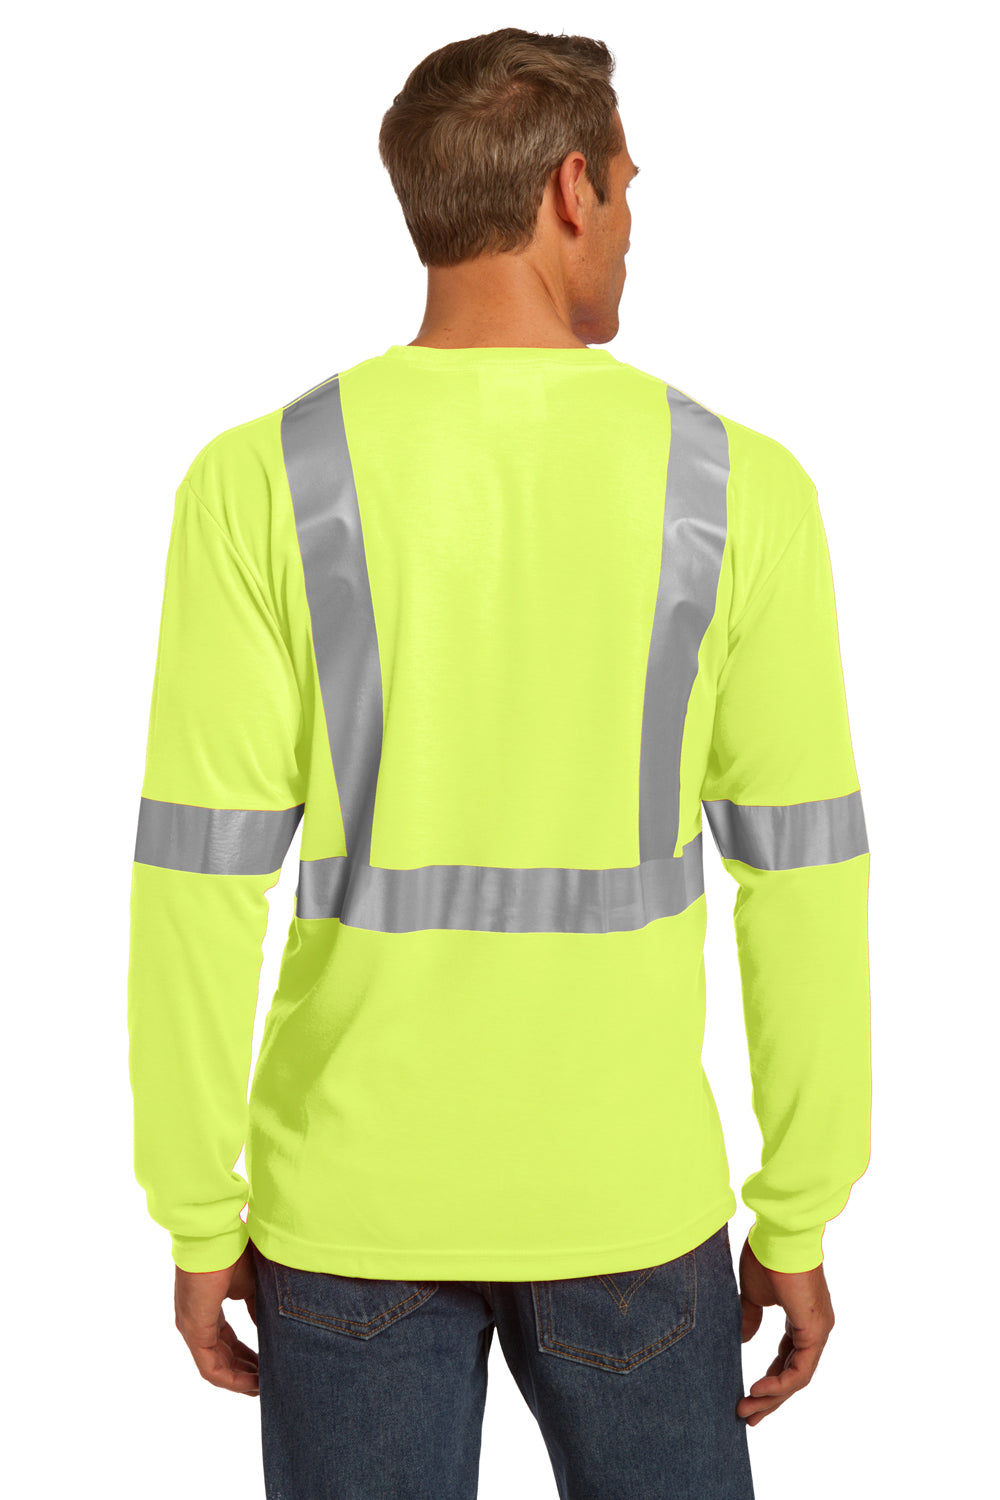 CornerStone CS401LS Mens Moisture Wicking Long Sleeve Crewneck T-Shirt w/ Pocket Safety Yellow Back